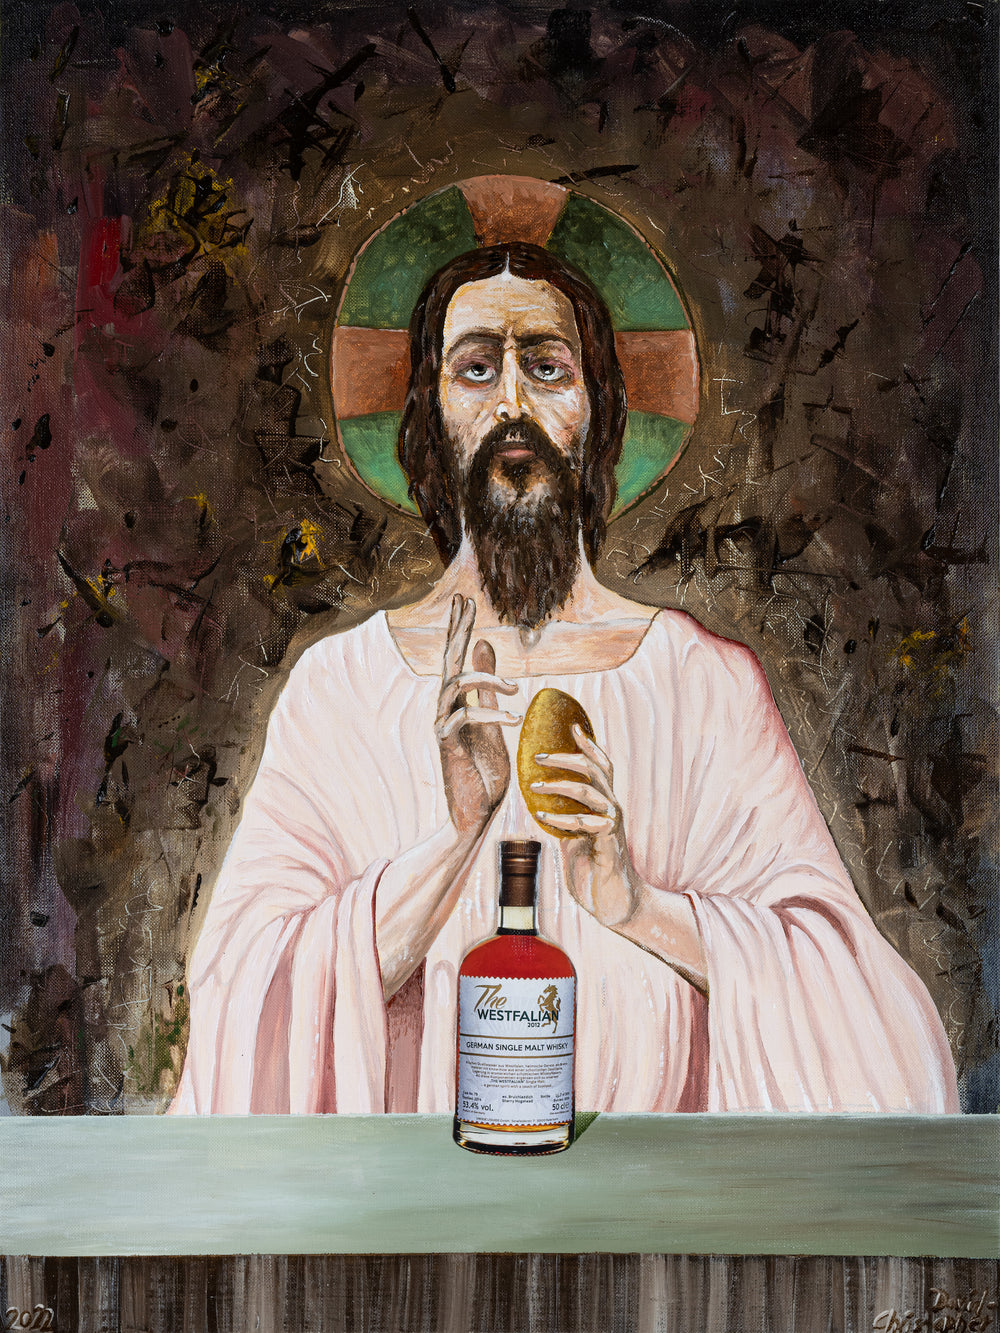 Jesus Loves You, and the Westfalian Whisky as well (ohne Schriftzug zum Westfalian Whisky) 25 x 33,3 cm